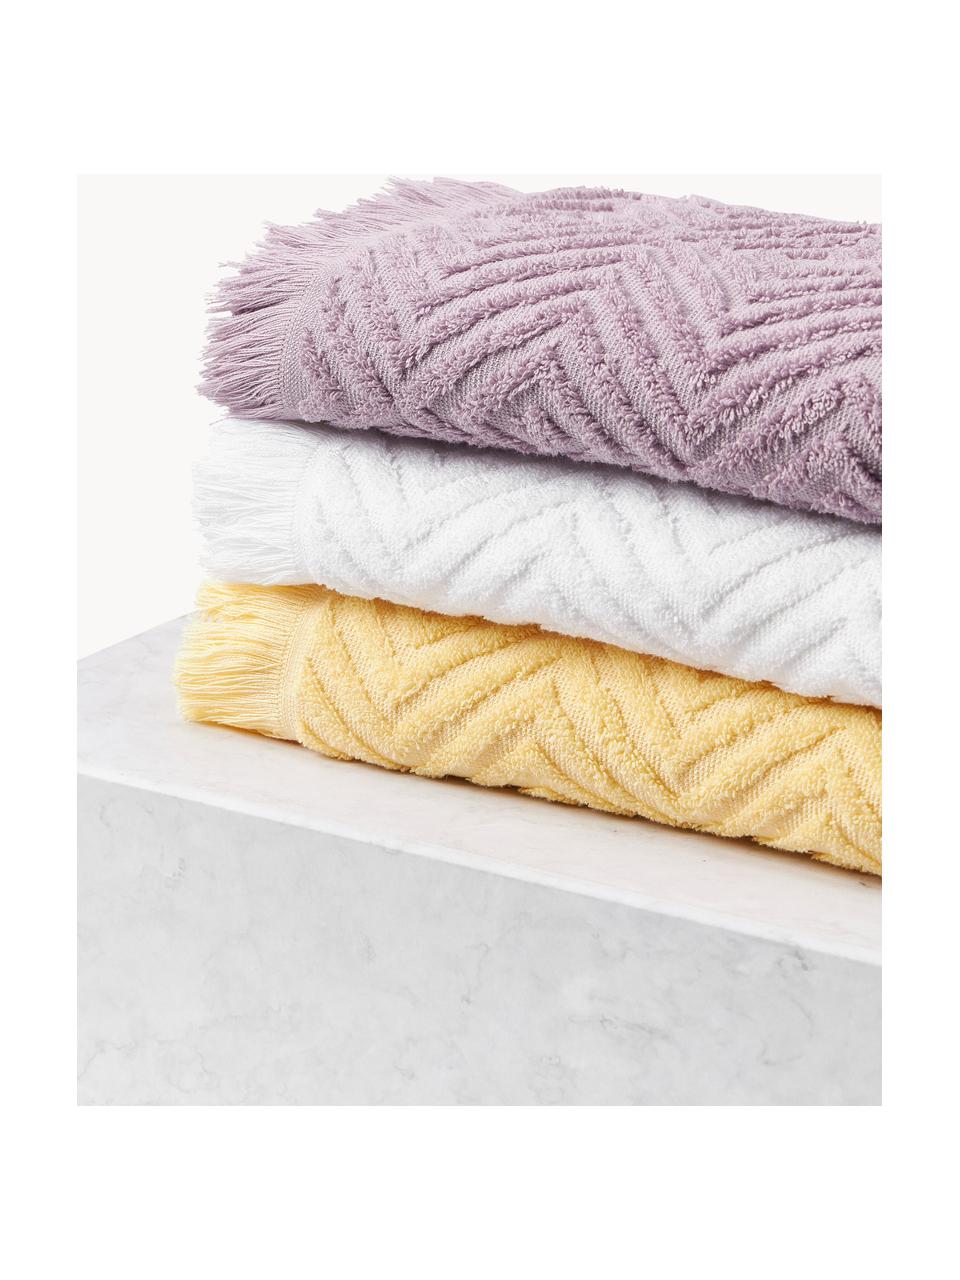 Set de toallas texturizadas Jacqui, tamaños diferentes, Blanco, Set de 4 (toallas lavabo y toallas ducha)